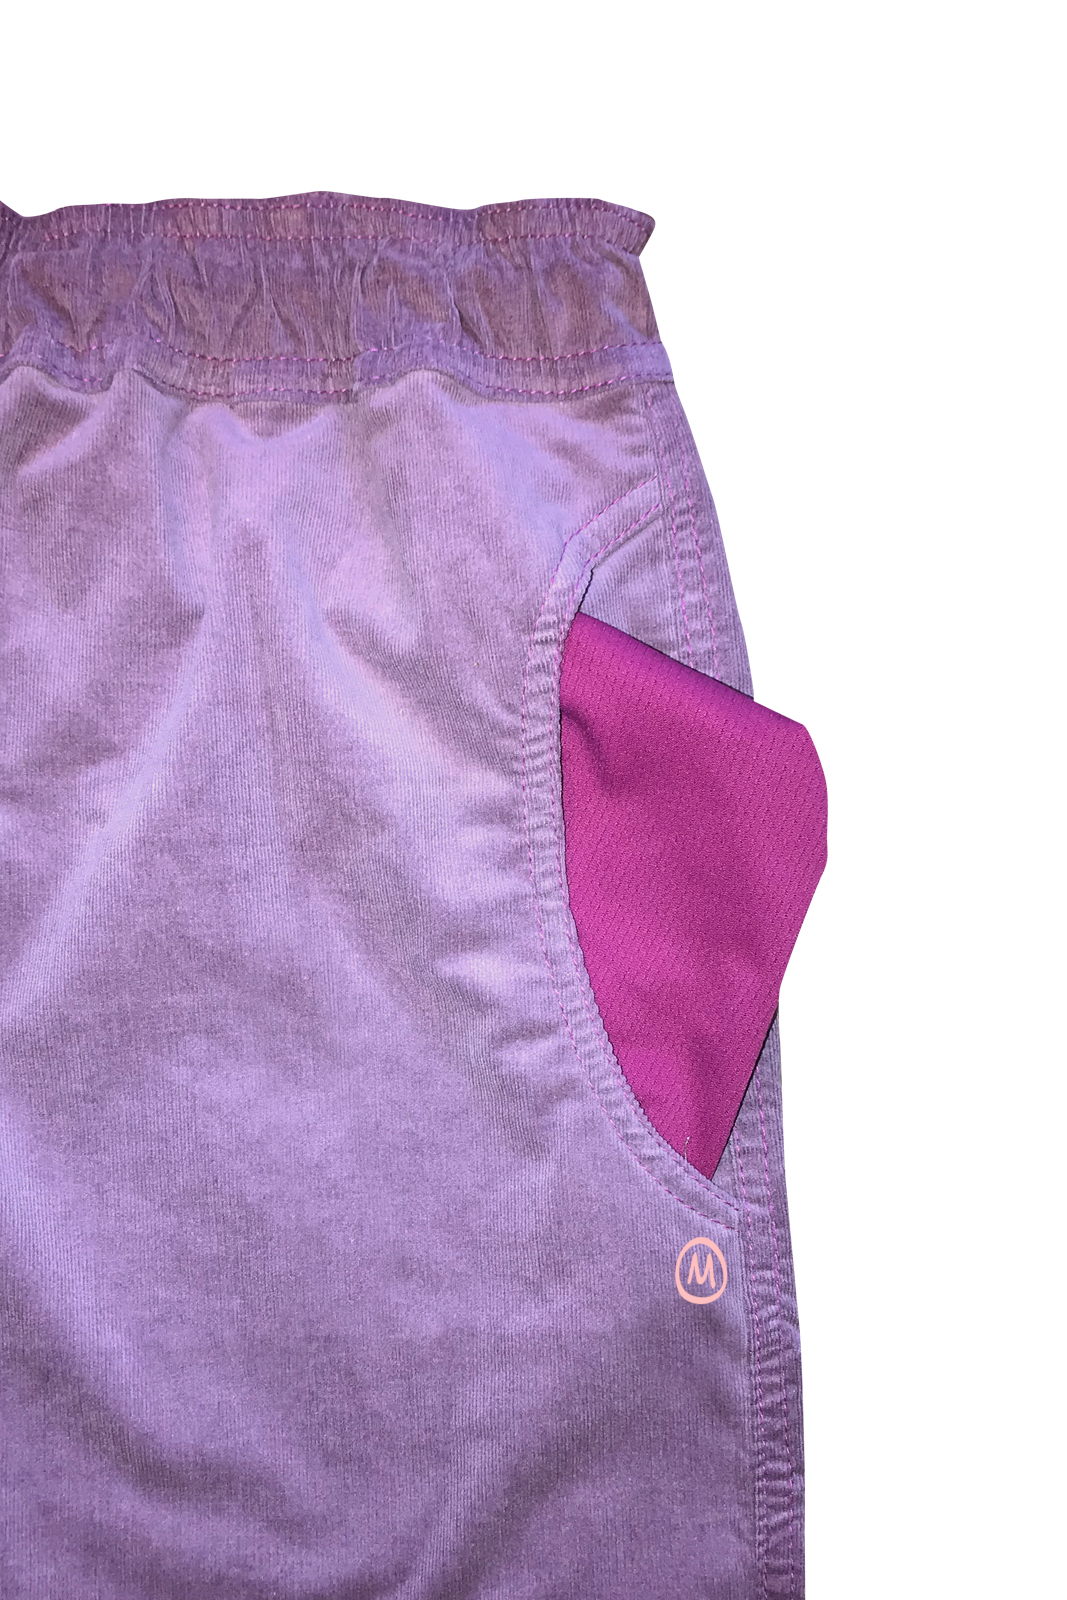 Monki Zana straight leg cord trousers in lilac | ASOS